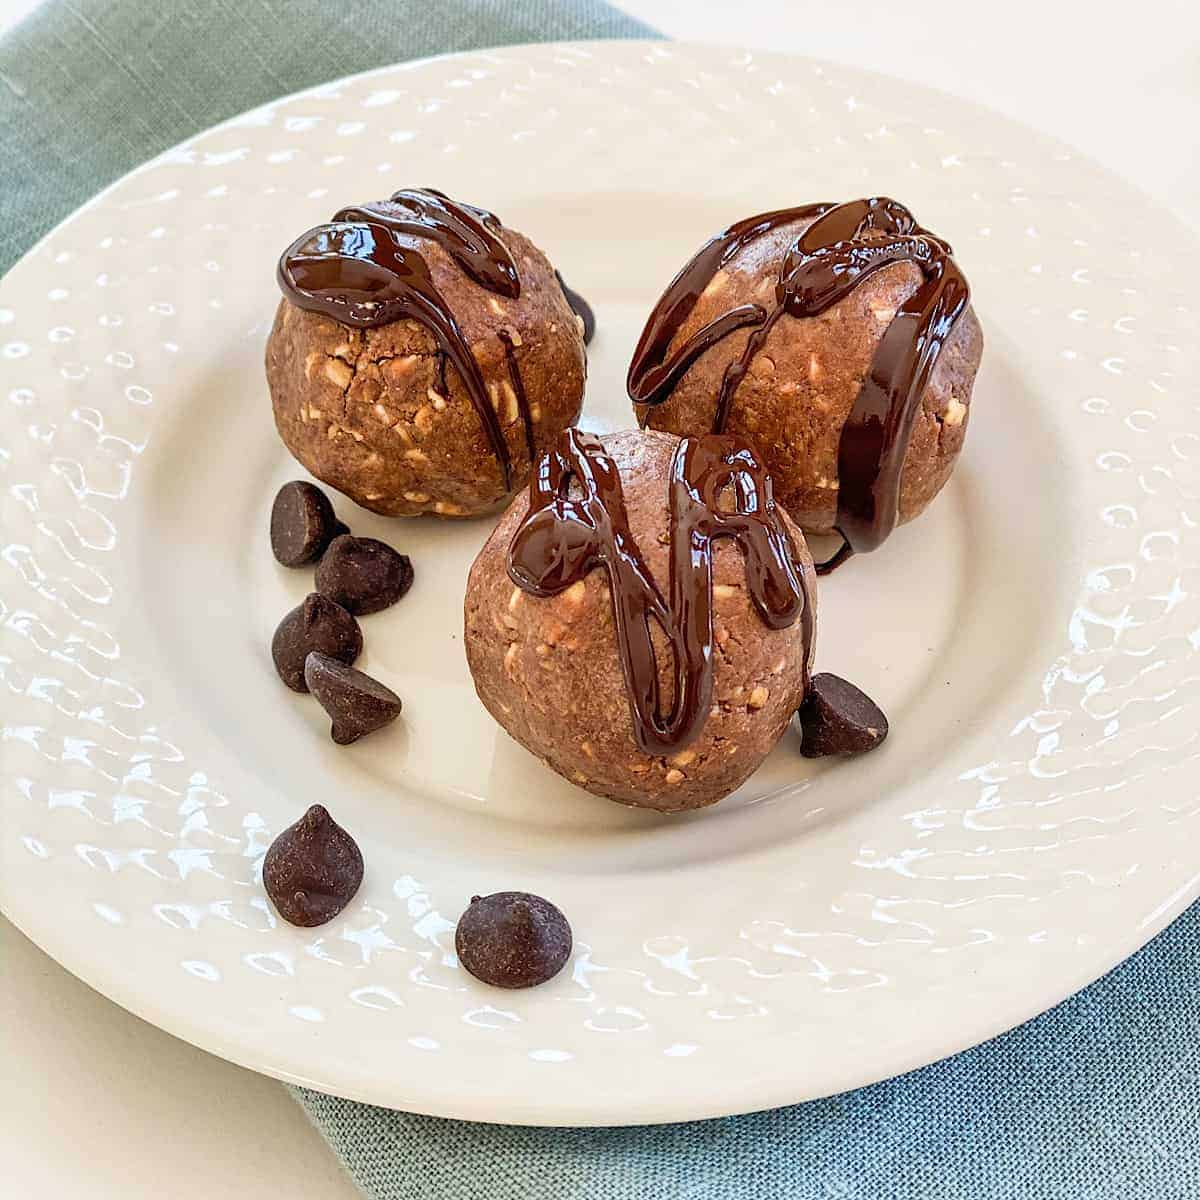 Image of bite sized Chocolate Peanut Butter Protein balls drizzled with chocolate with chocolate chips sprinkled on white plate on light blue linen napkin.